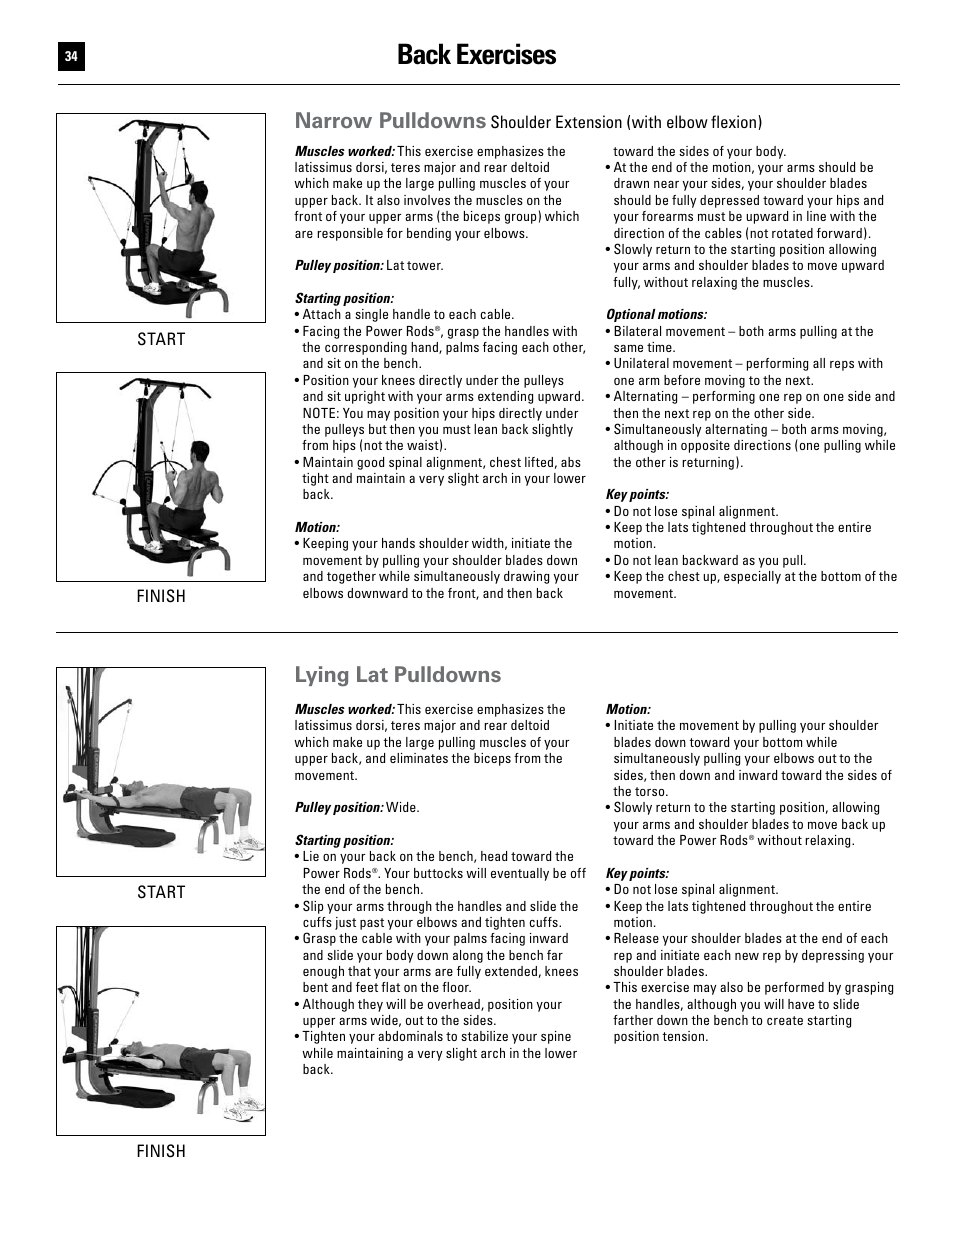 Back exercises, Narrow pulldowns, Lying lat pulldowns | Bowflex Ultimate User Manual | Page 34 / 110